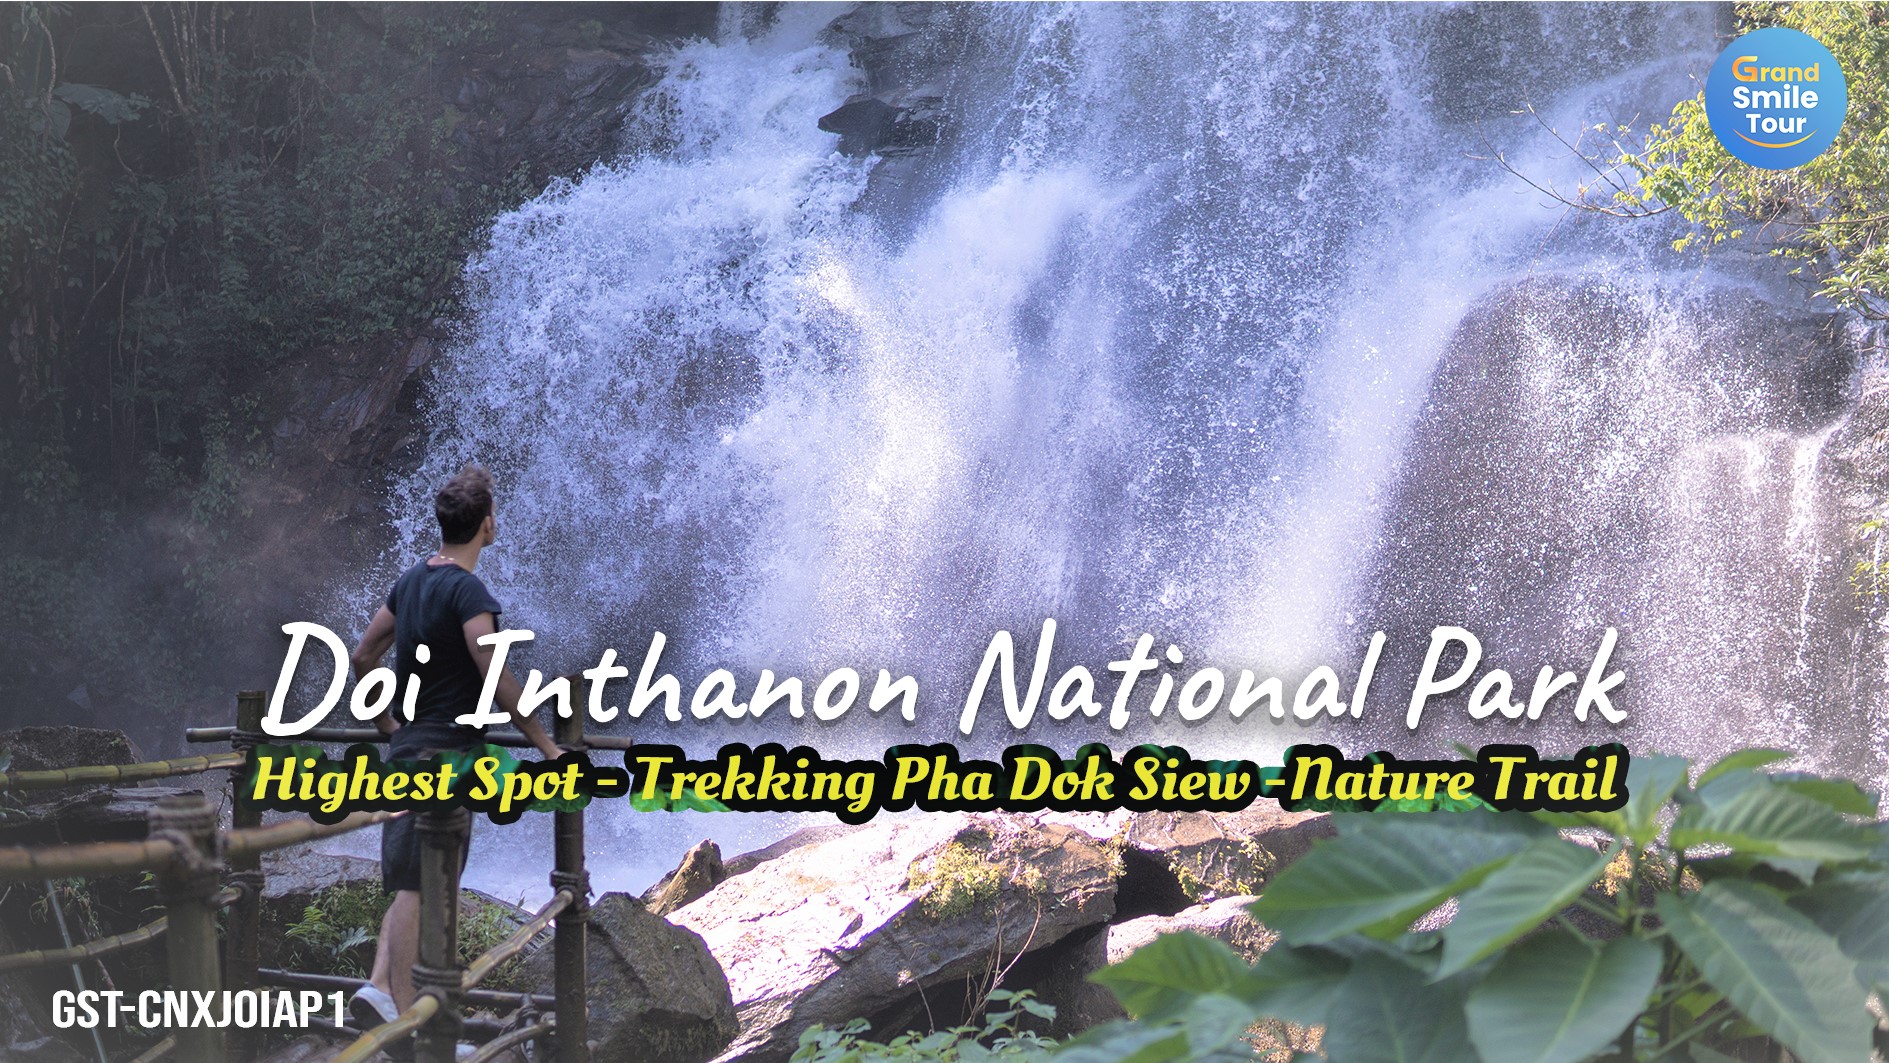 GST-CNXJOIAP1 Doi Inthanon National Park